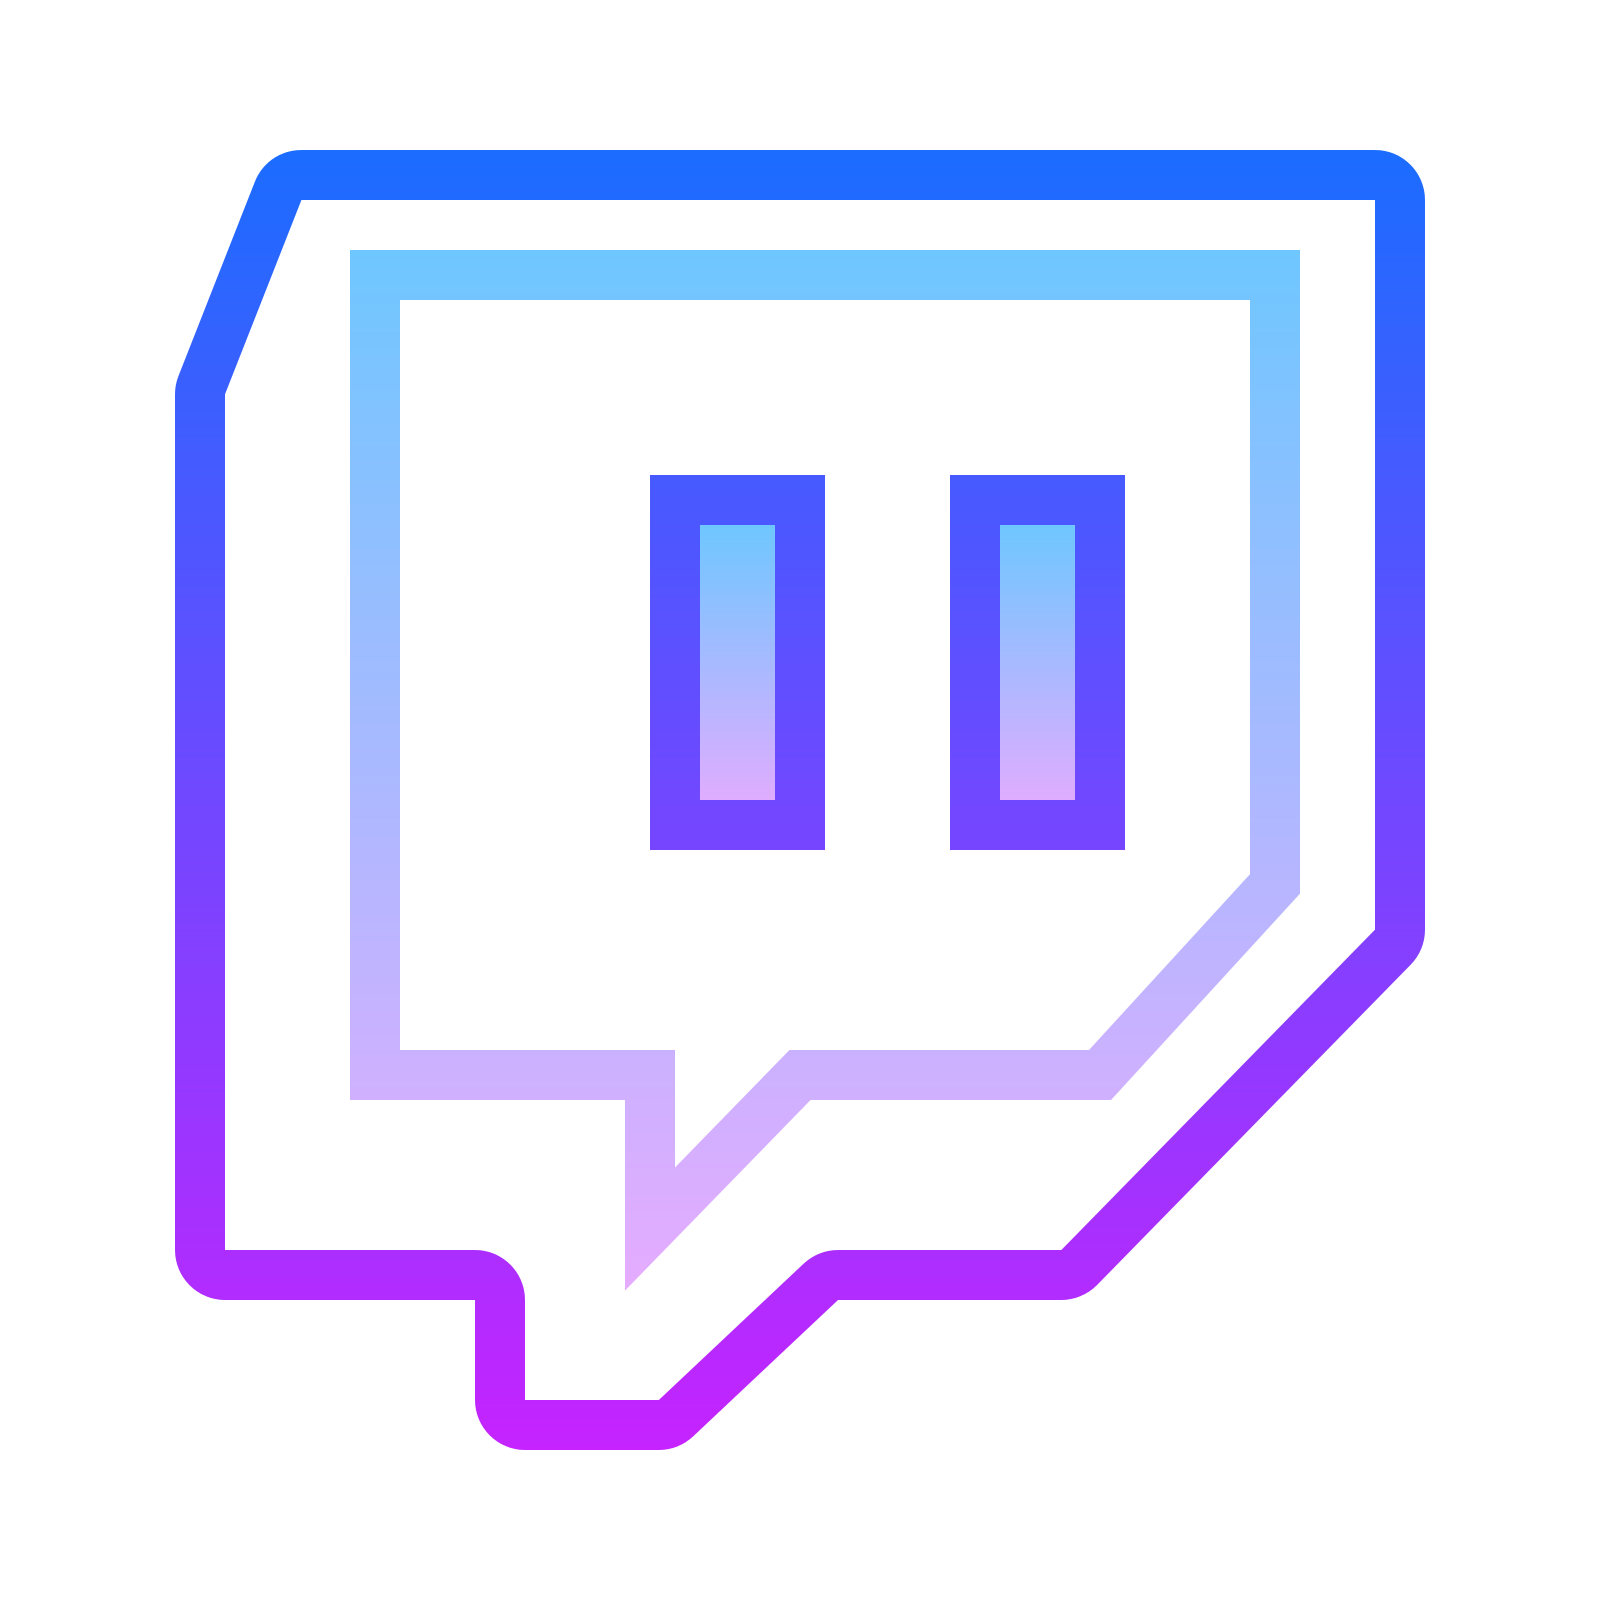 Logotipo de Twitch PNG imagen photo